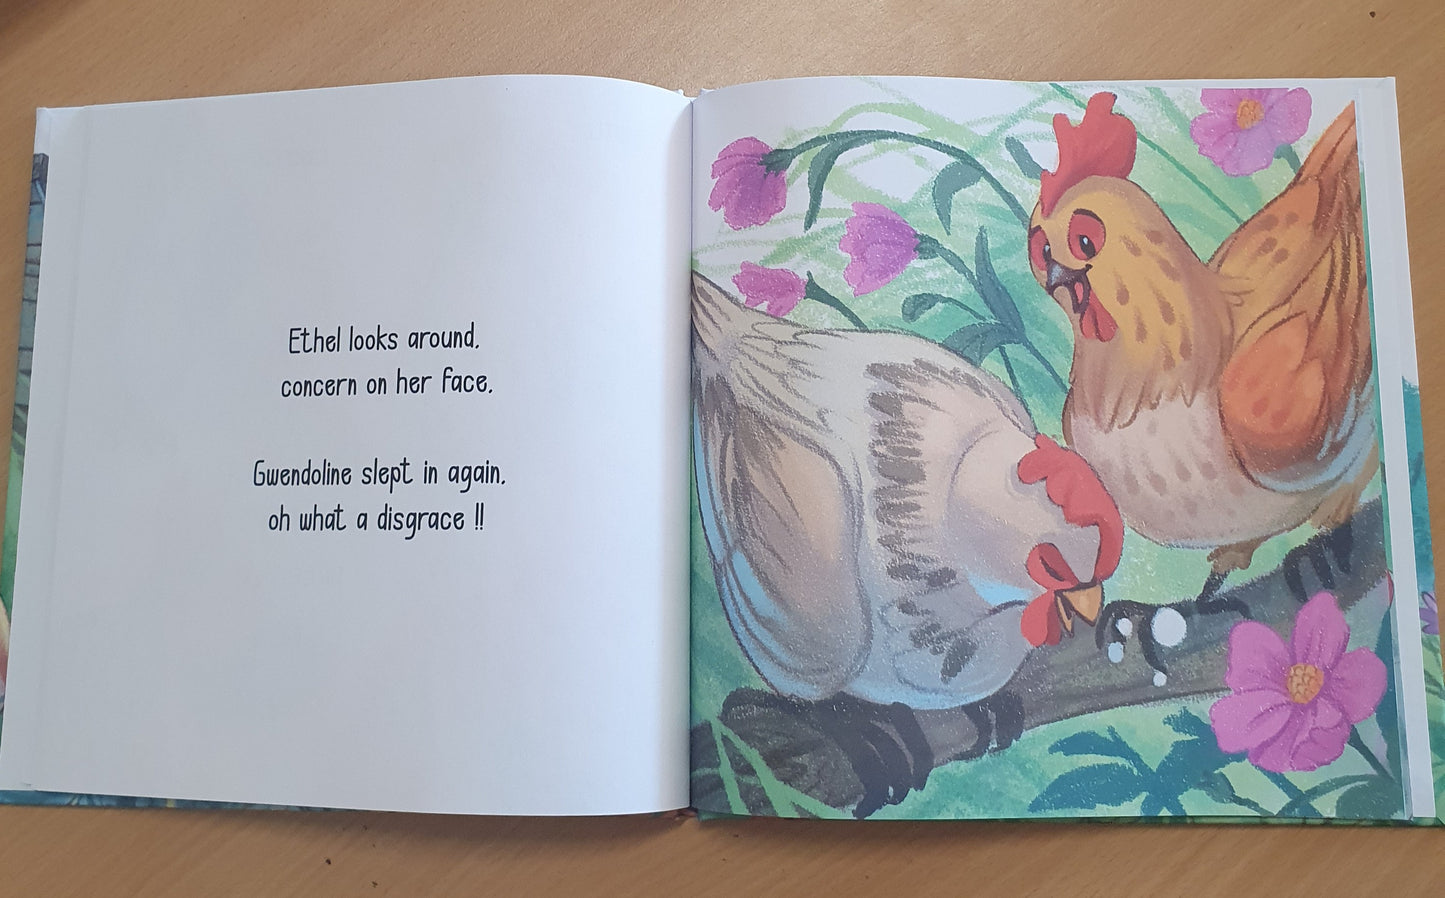 Children's Book -  Jack's Chook Yard